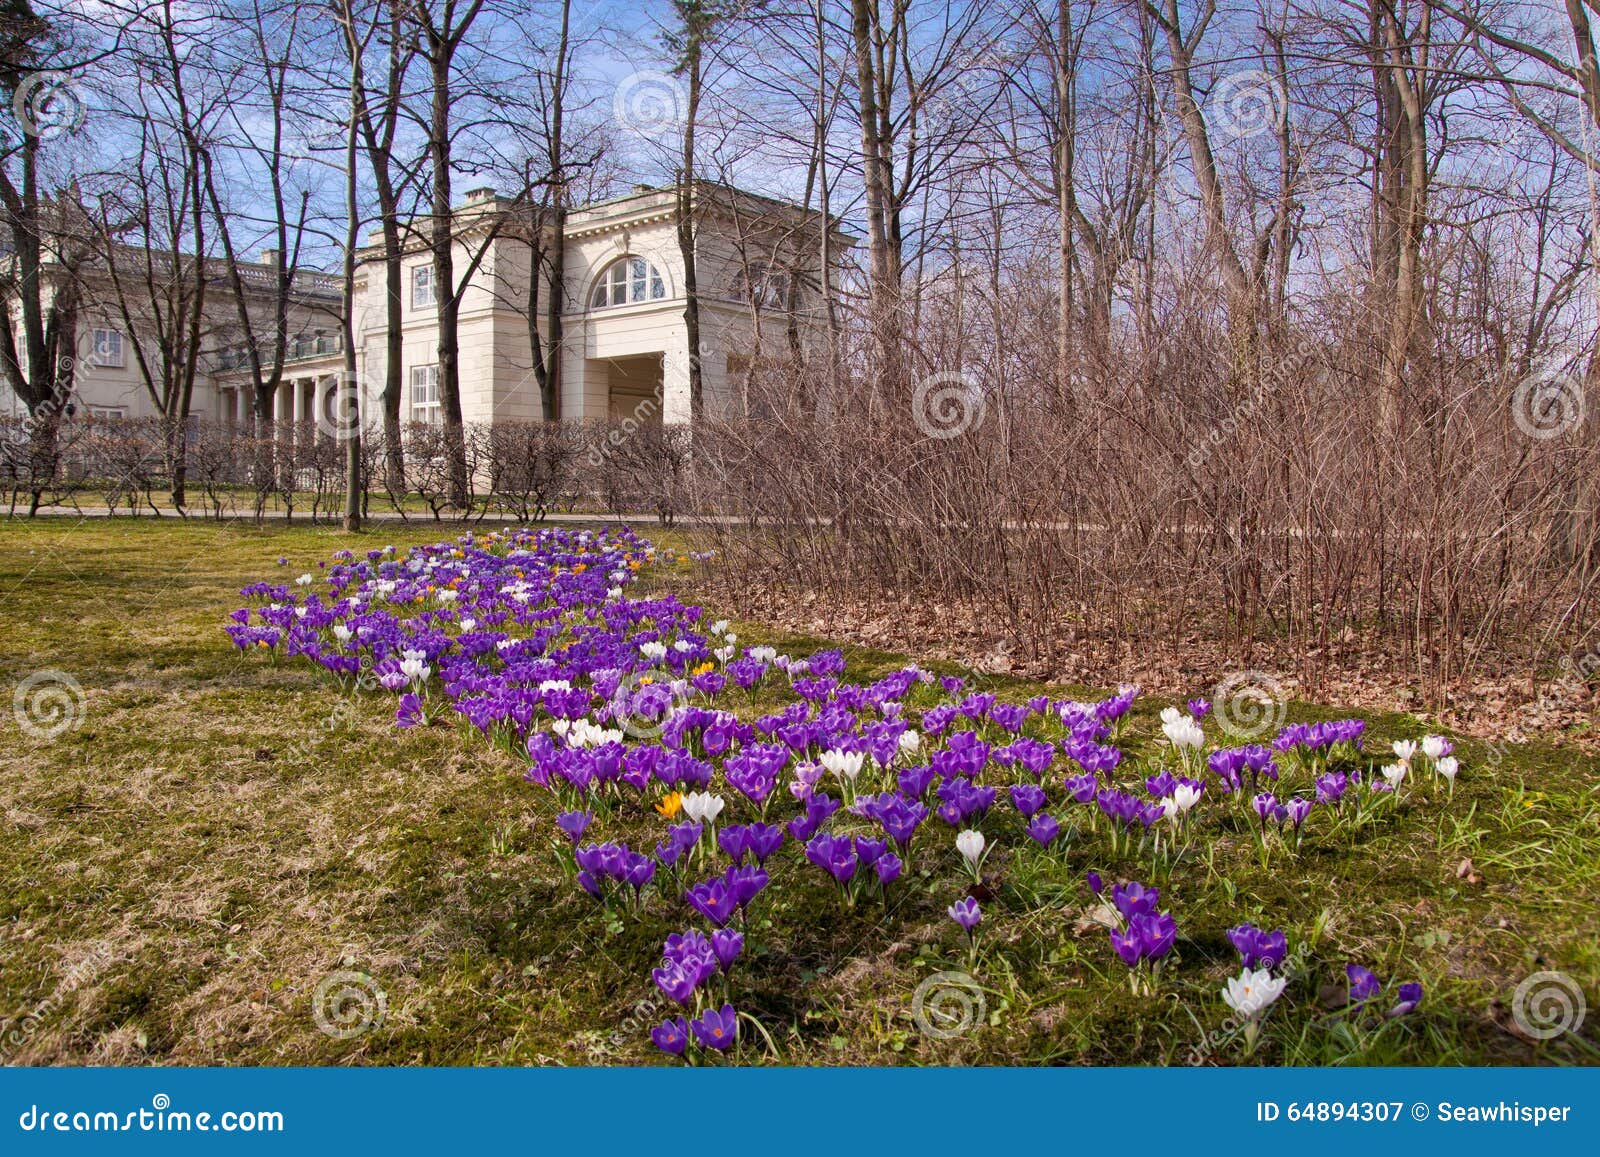 Crocuses in Warsaw park. Bunch of violet crocuses in Warsaw Lazienki park